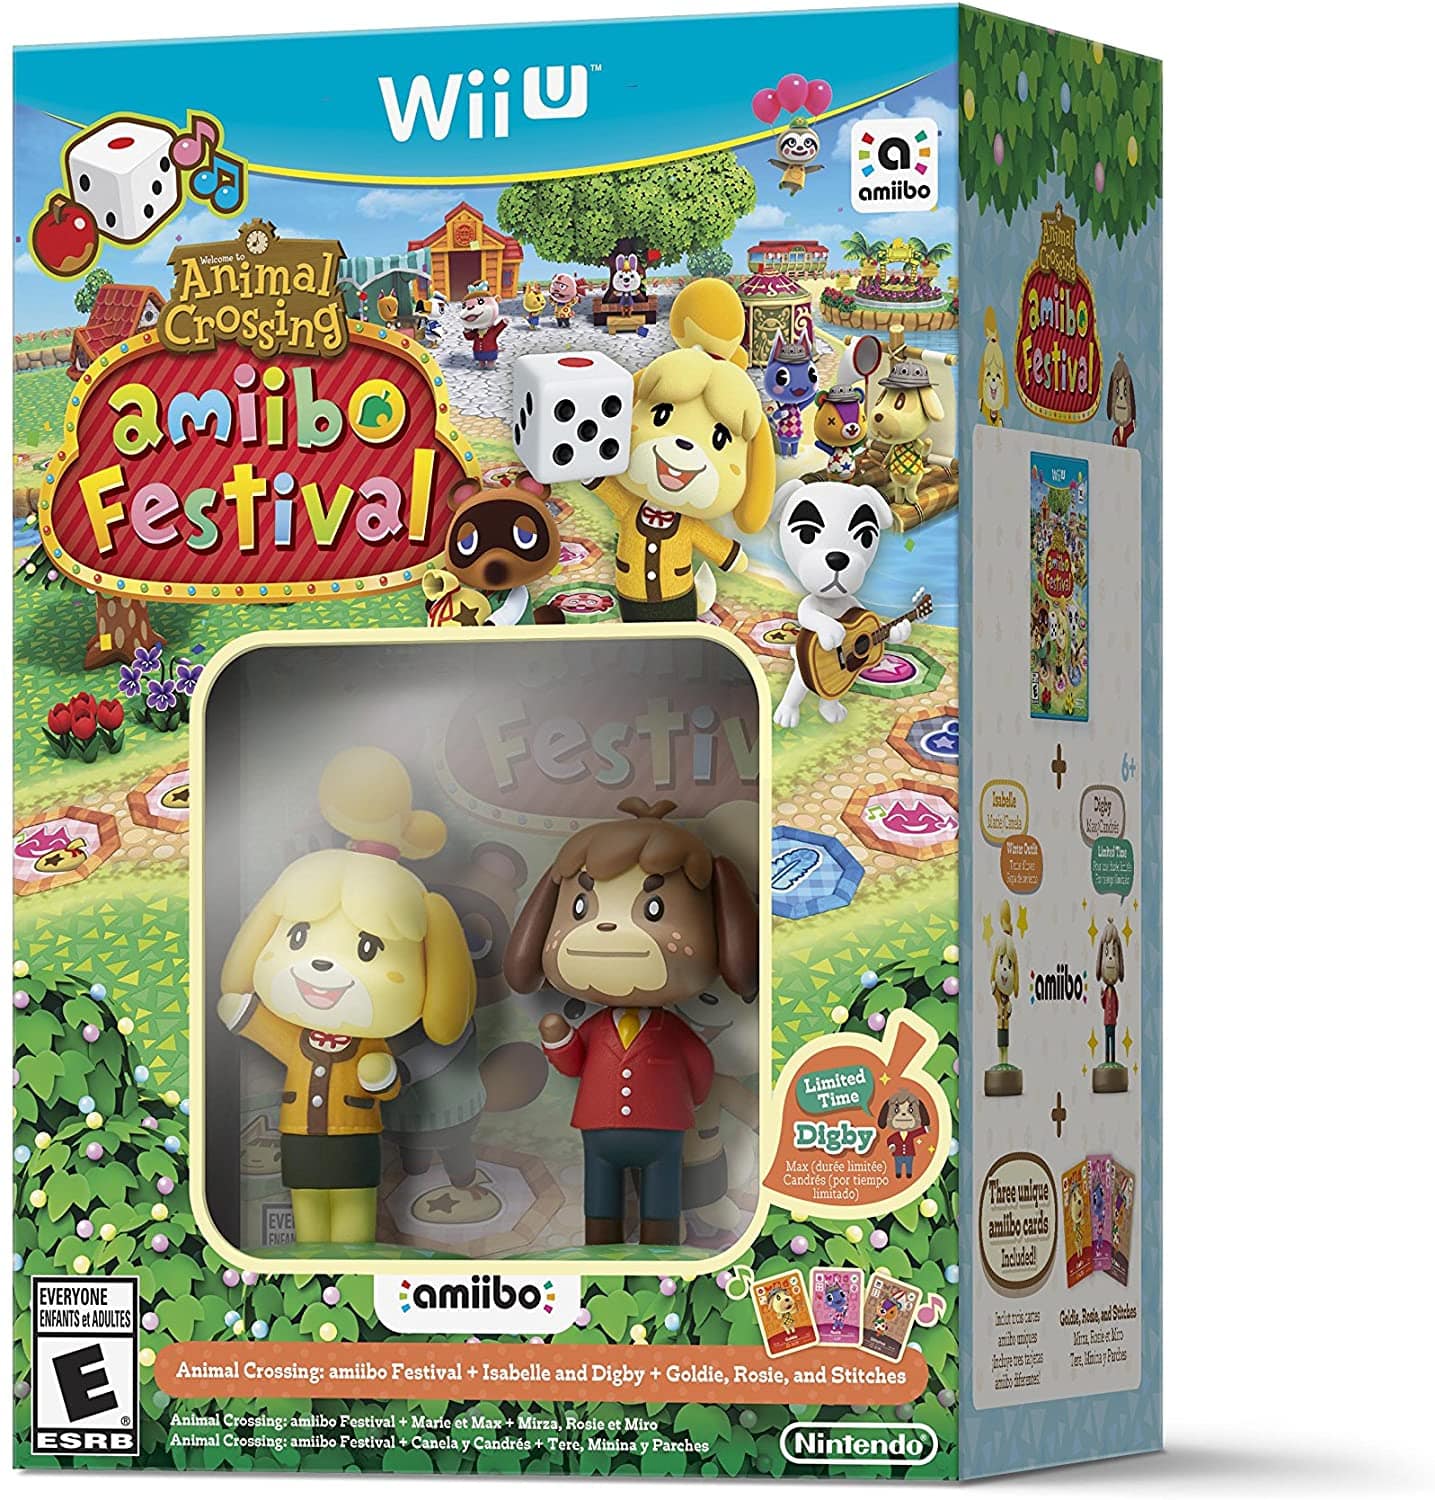 Animal Crossing: Amiibo Festival - Wii U Animal Crossing Edition King Gaming